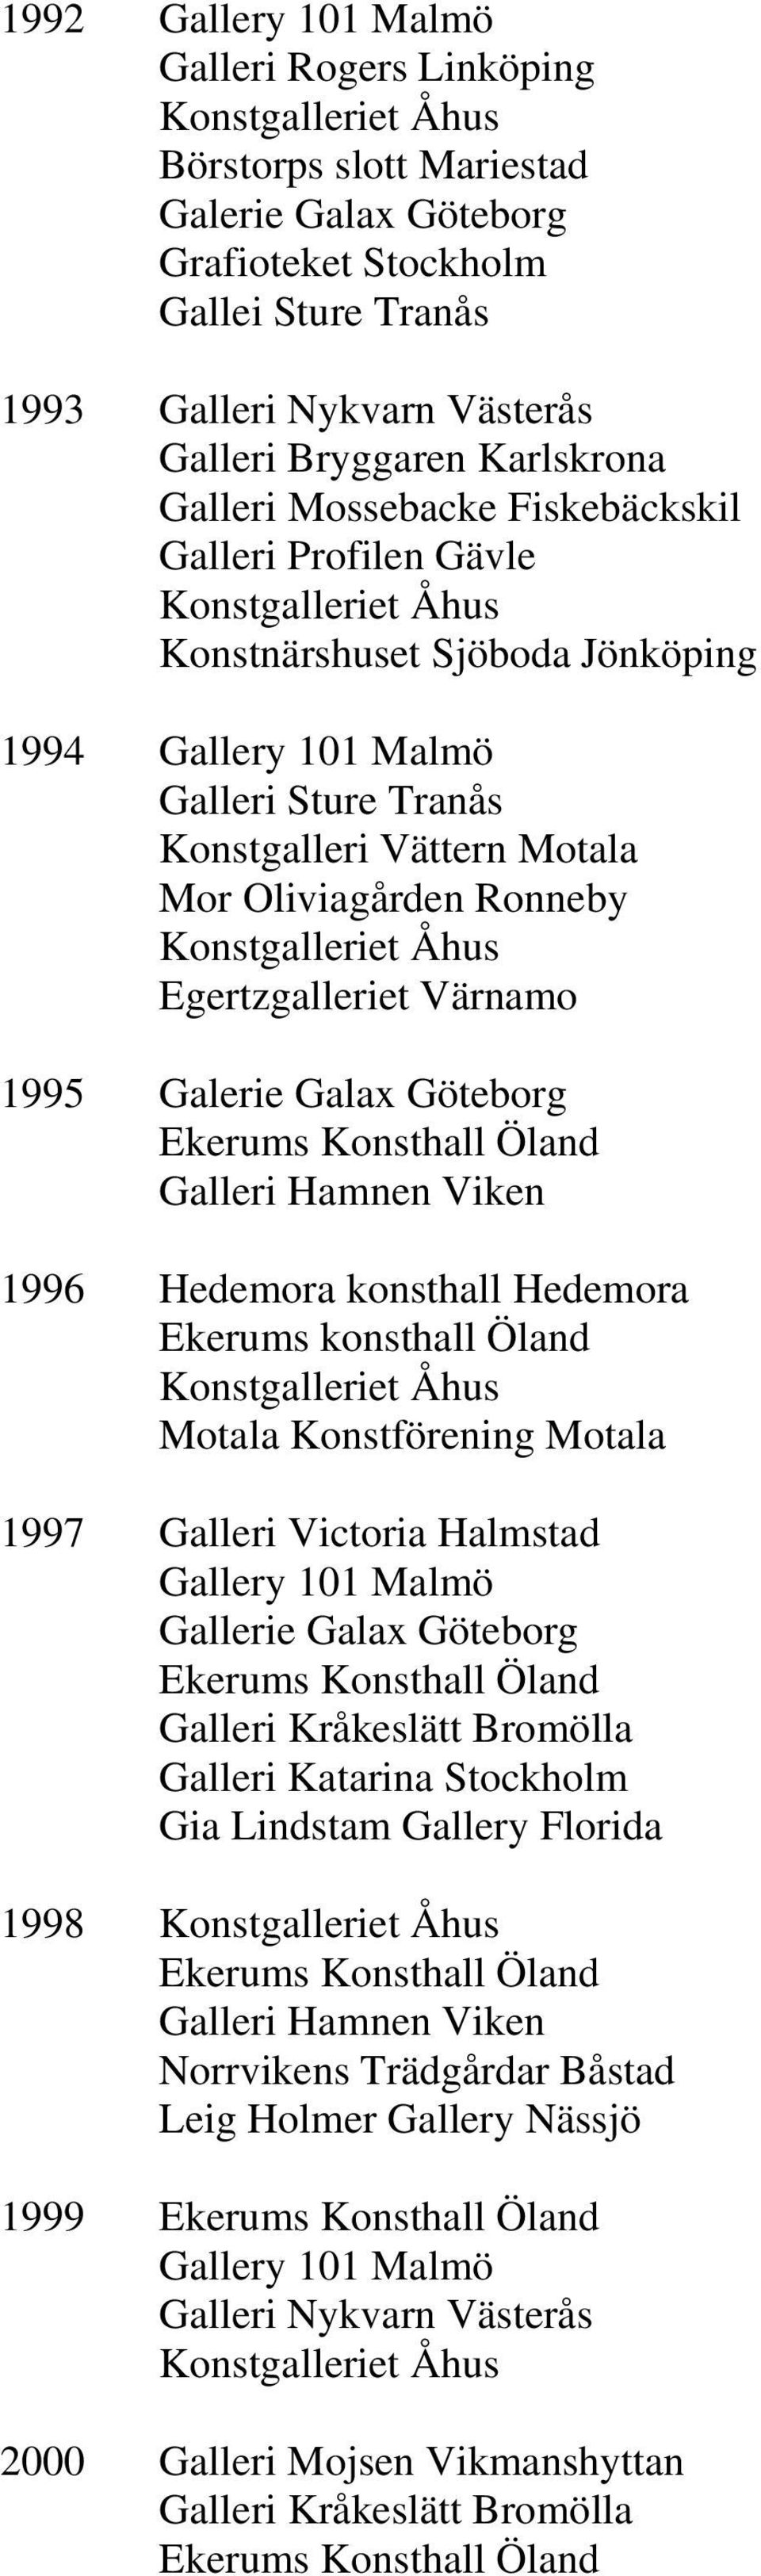 Värnamo 1995 1996 Hedemora konsthall Hedemora Ekerums konsthall Öland Motala Konstförening Motala 1997 Galleri Victoria Halmstad Gallerie Galax